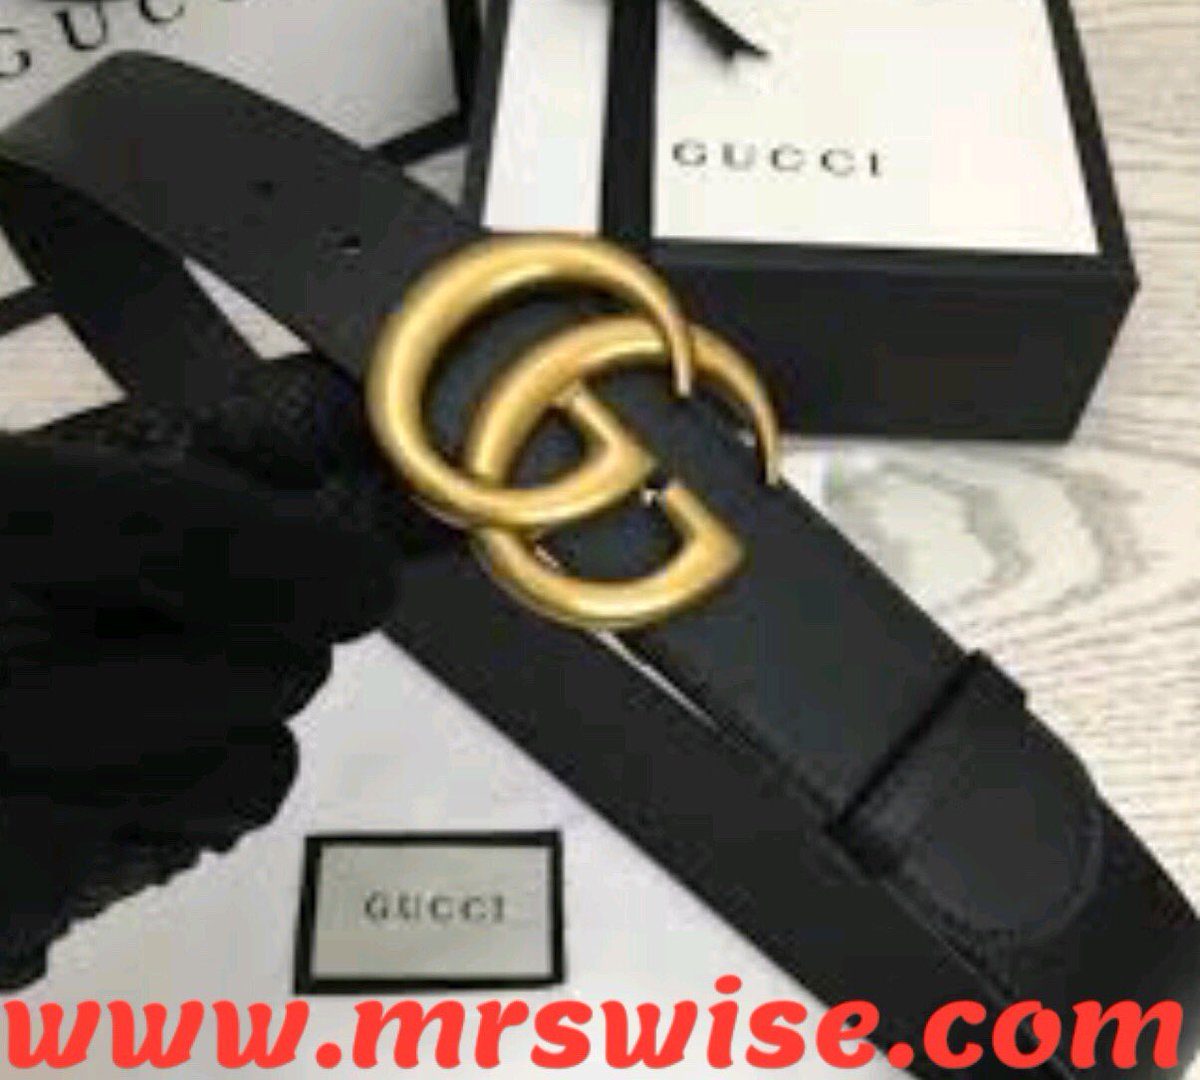 gucci belts outlet online